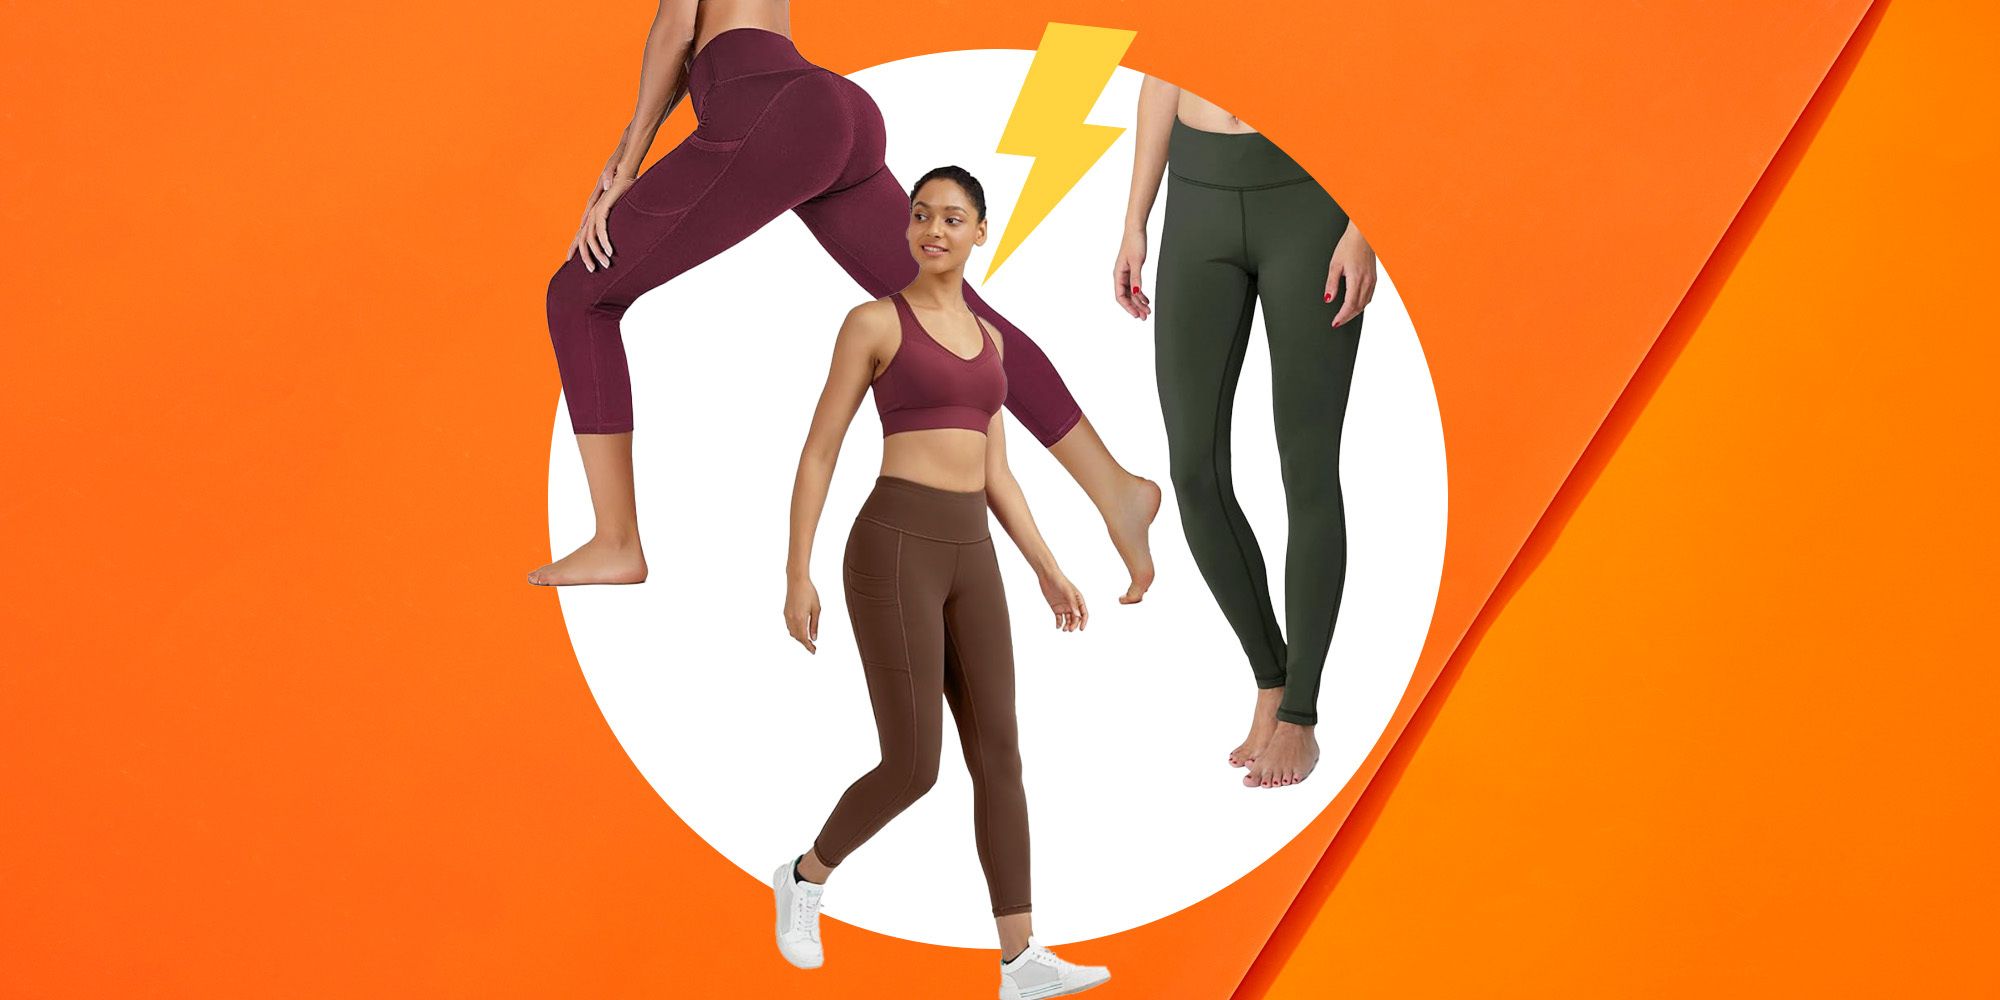 Amazon.com: Yogipace,Side Pockets,Extra Tall Women's Yoga Workout Leggings  Extra Long Active Pants,36